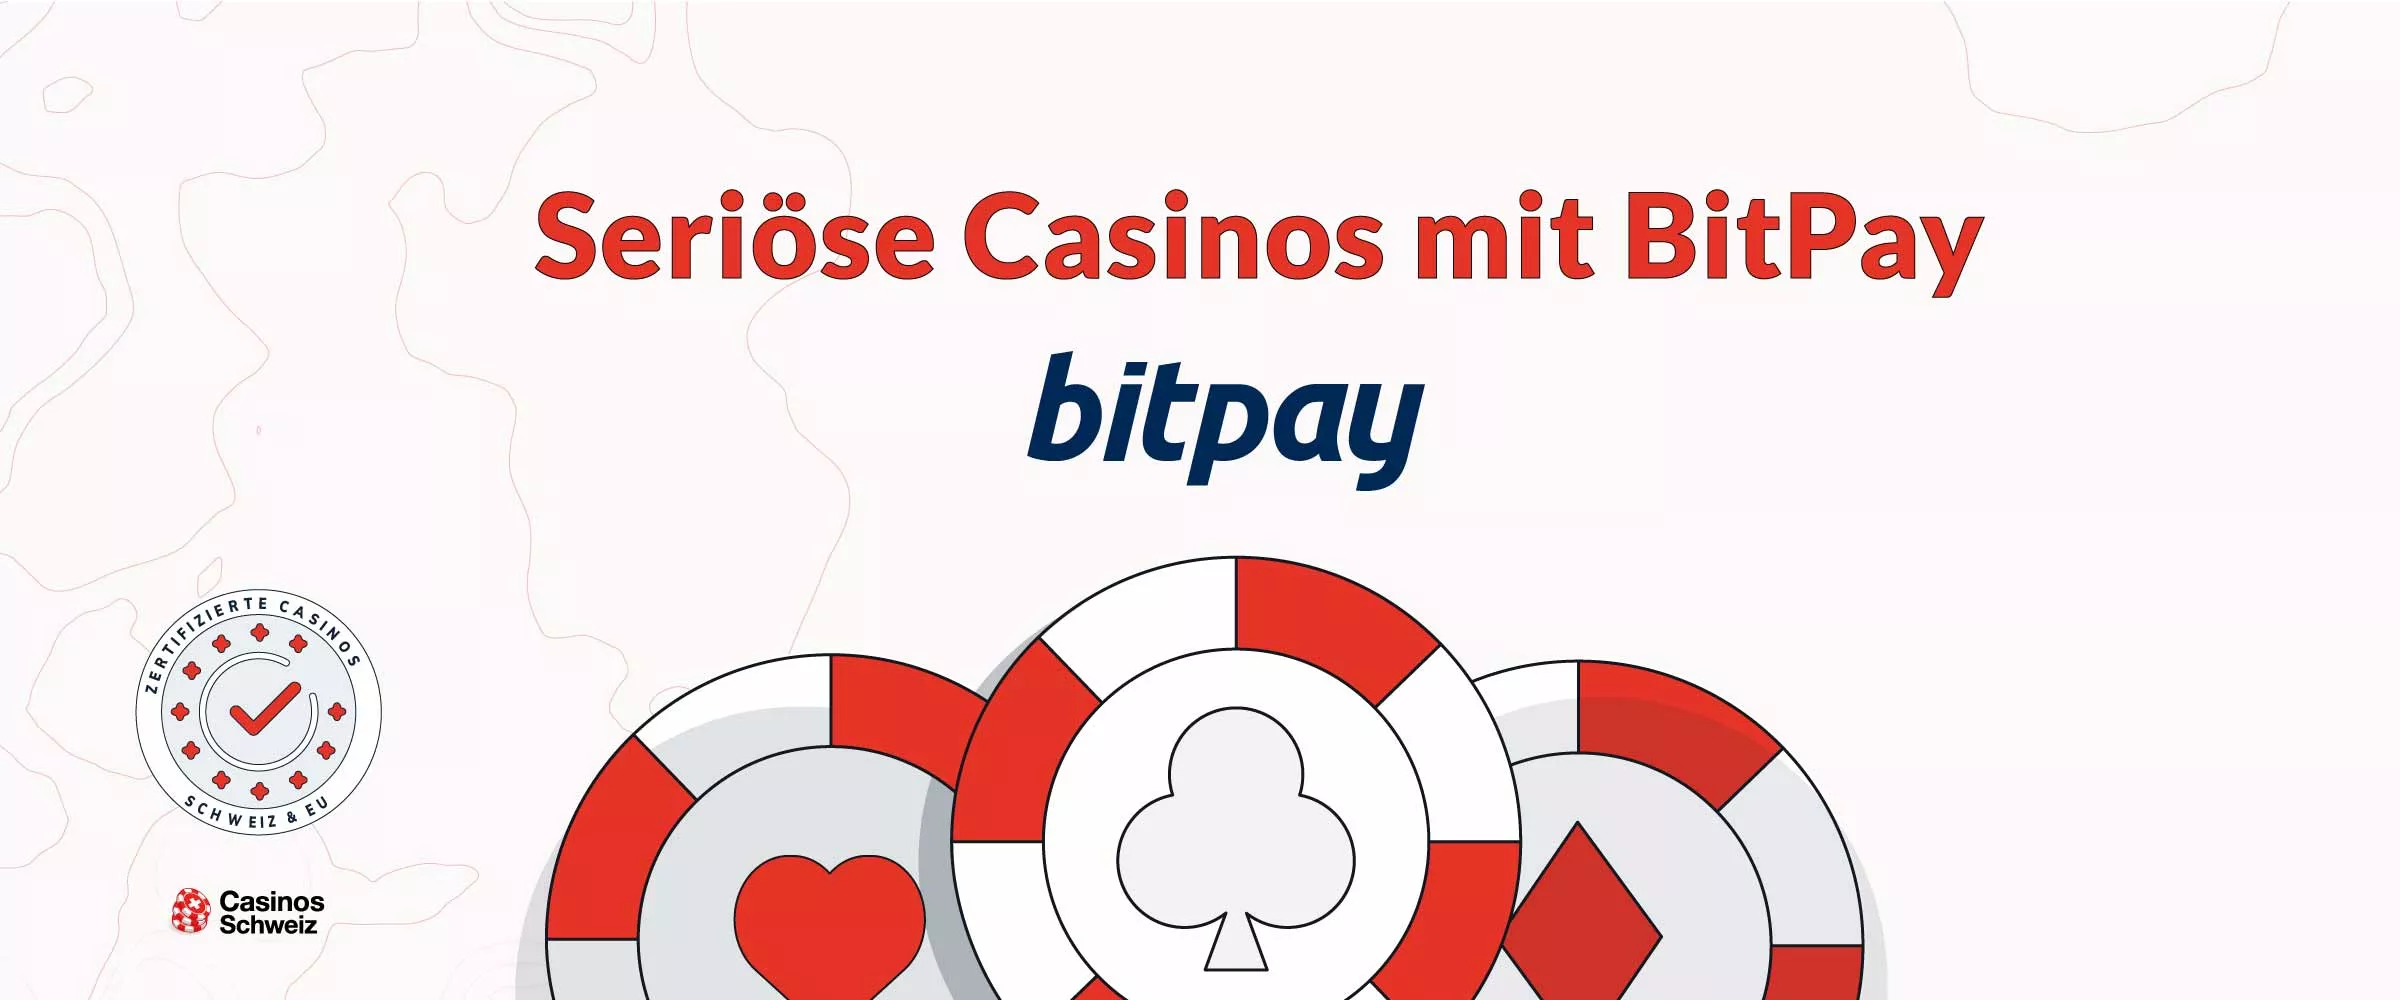 Seriöse BitPay Casinos